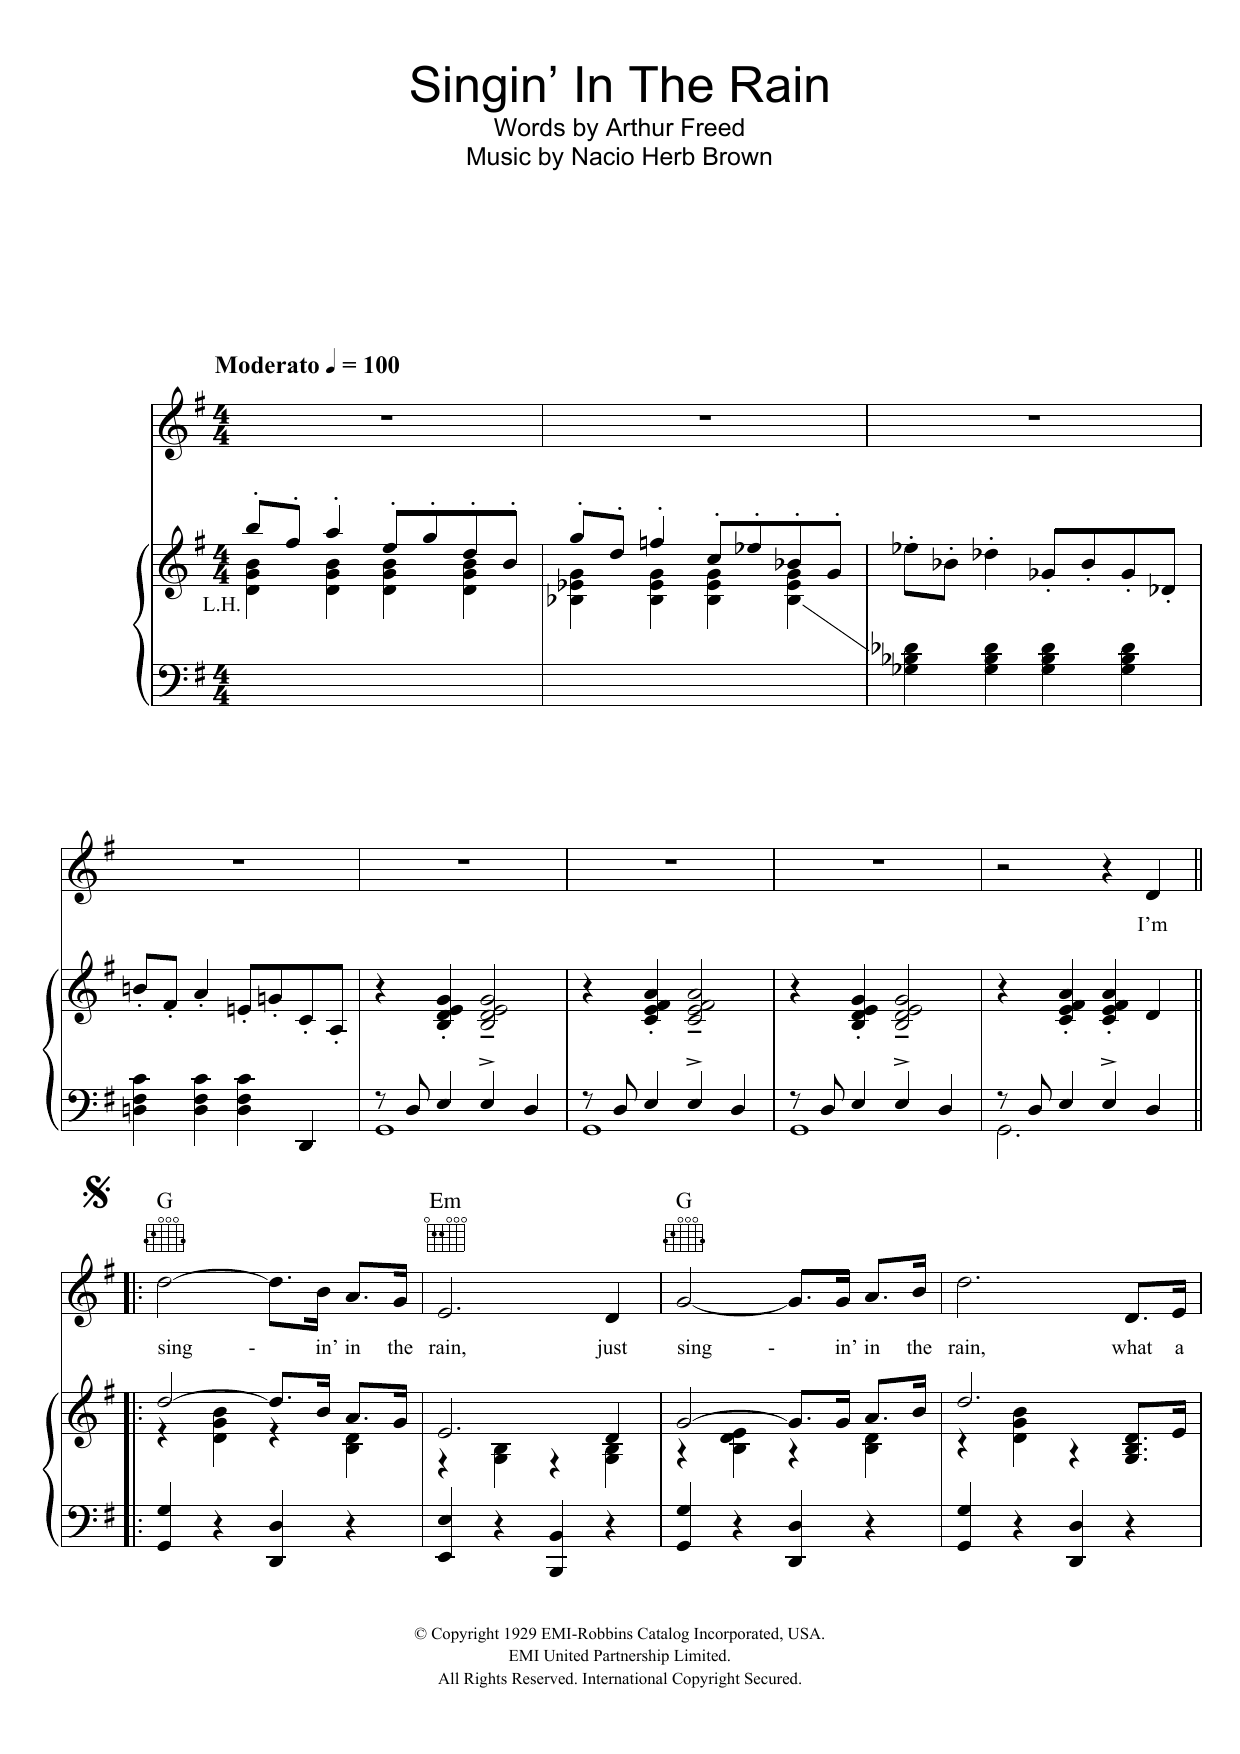 Gene Kelly Singin' In The Rain Sheet Music Notes & Chords for TTBB - Download or Print PDF